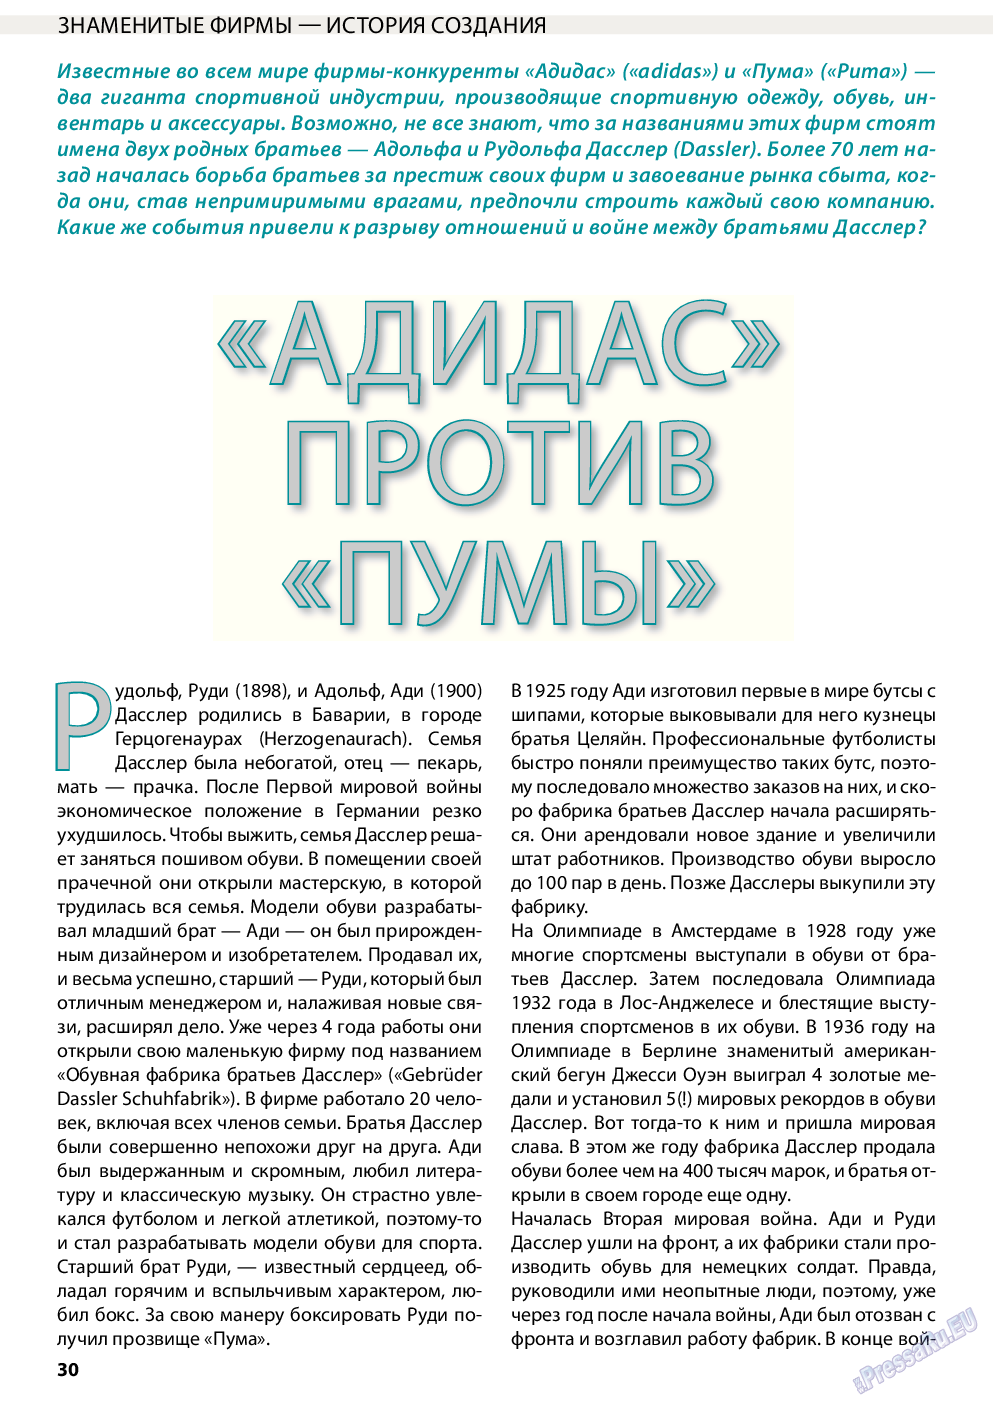 Wadim, журнал. 2013 №9 стр.30